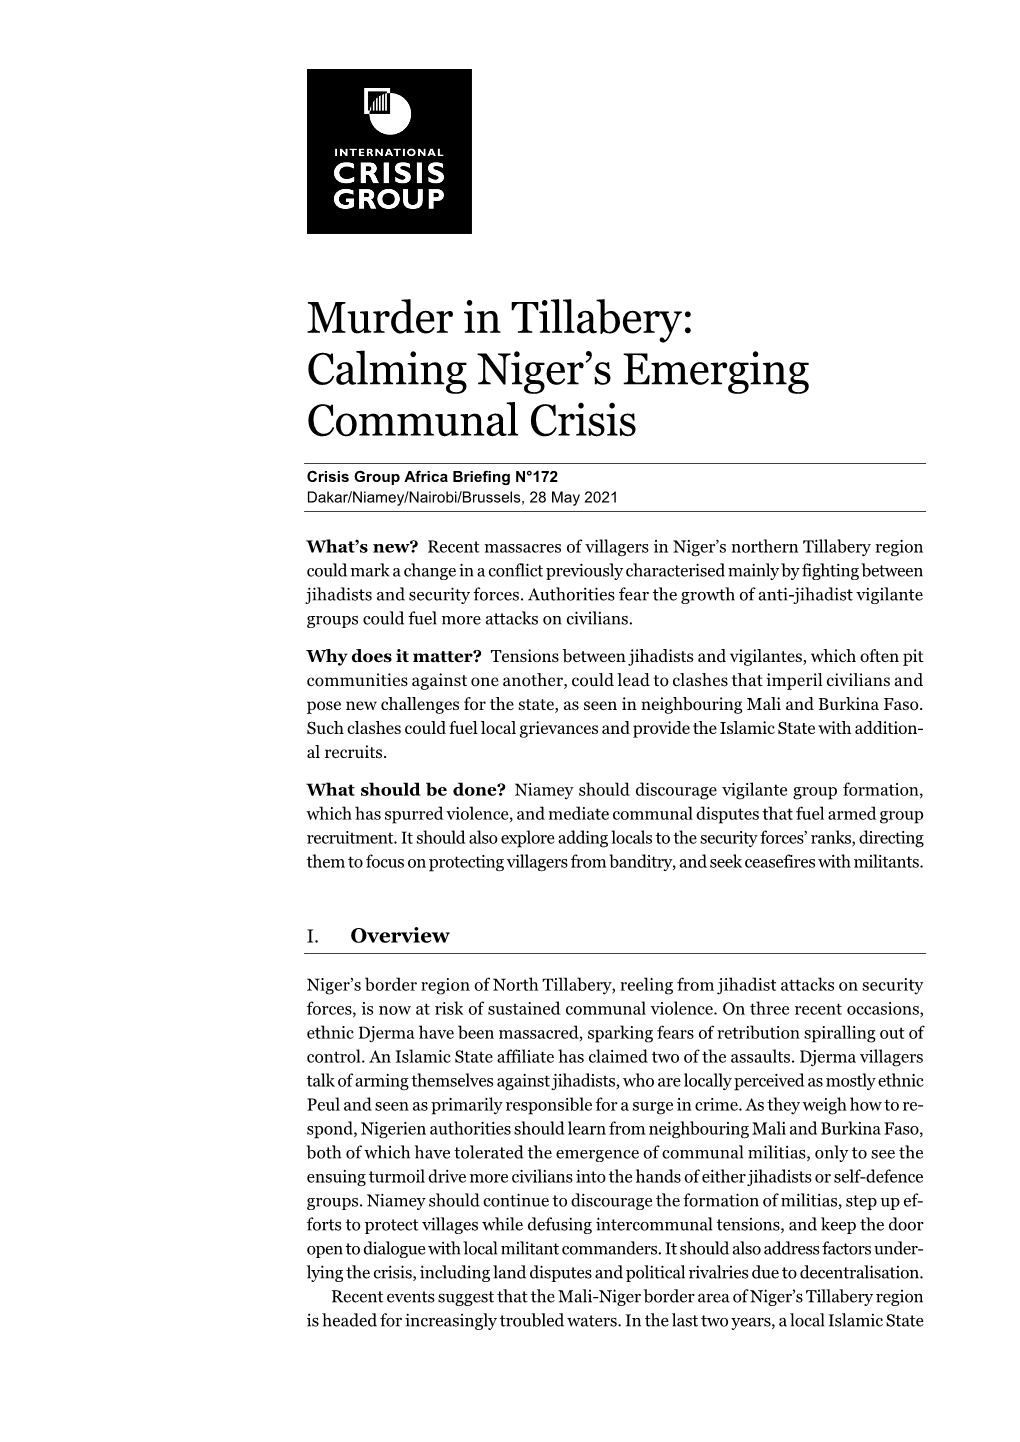 Murder in Tillabery: Calming Niger’S Emerging Communal Crisis